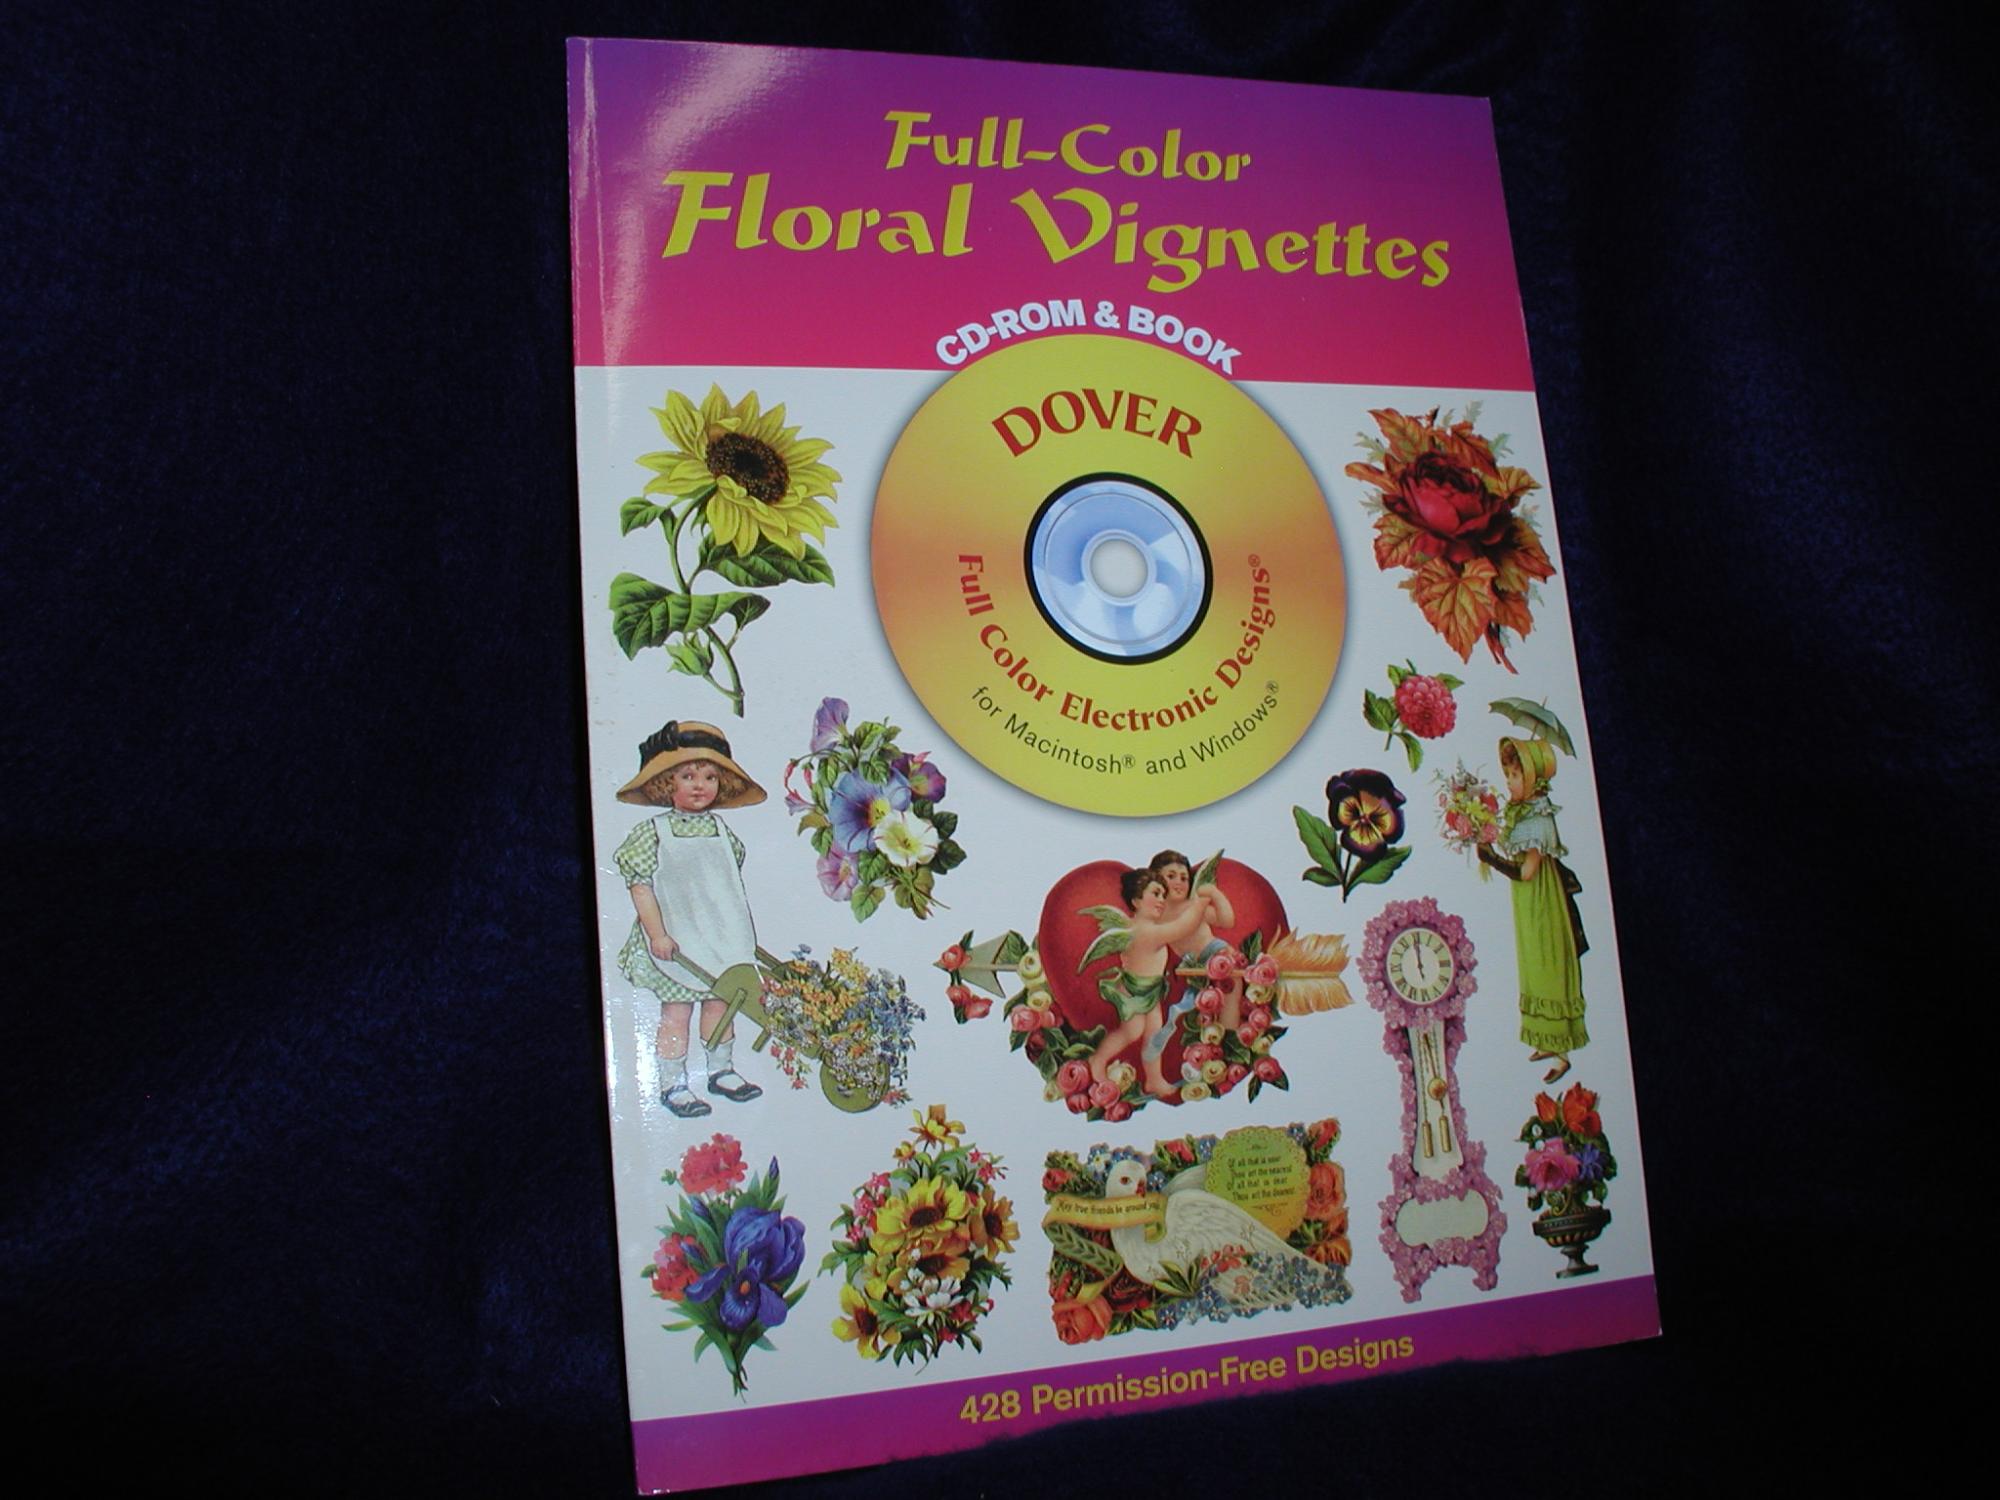 Full-Color Floral Vignettes: CD-ROM & Book